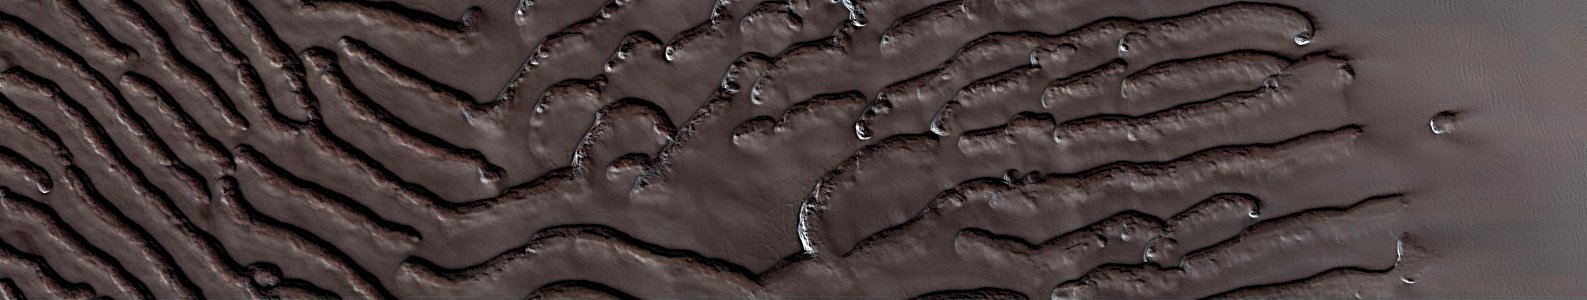 Mars - South Polar Layered Deposits